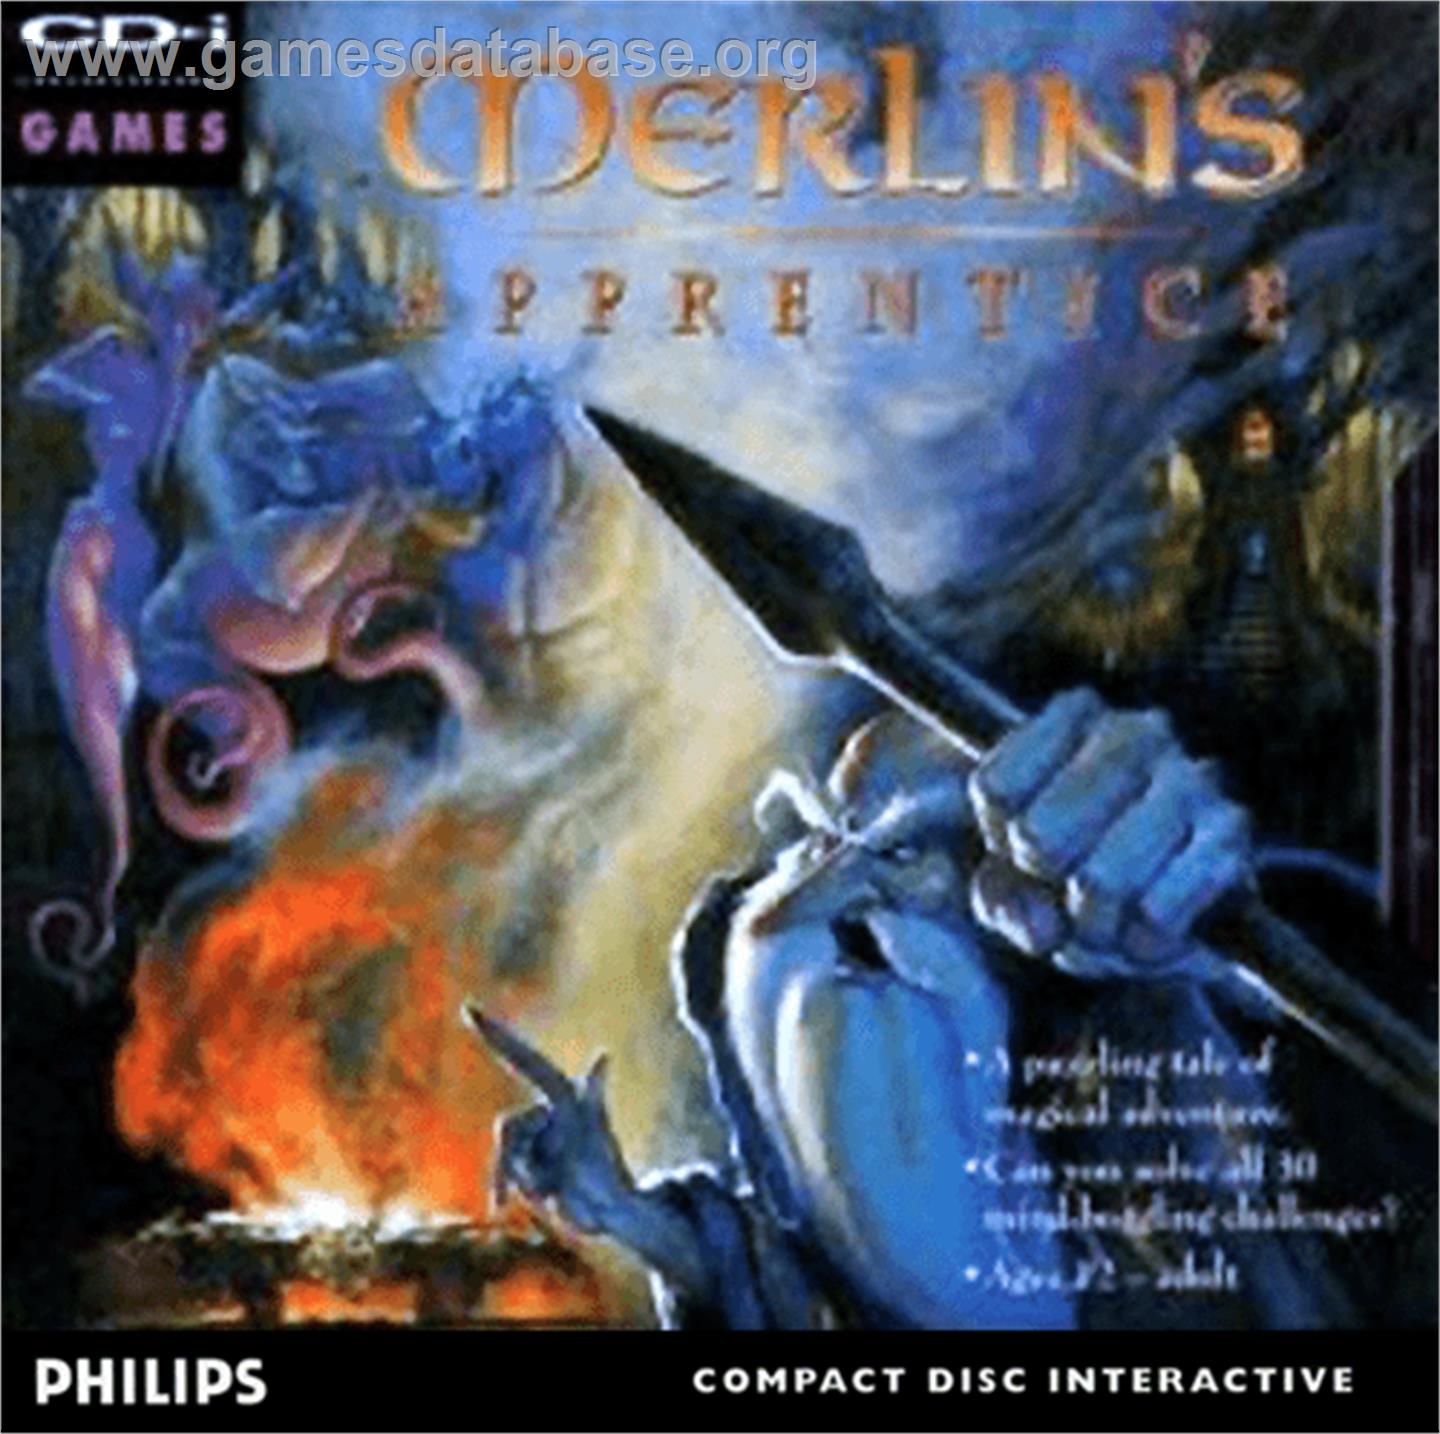 Merlin's Apprentice - Philips CD-i - Artwork - Box